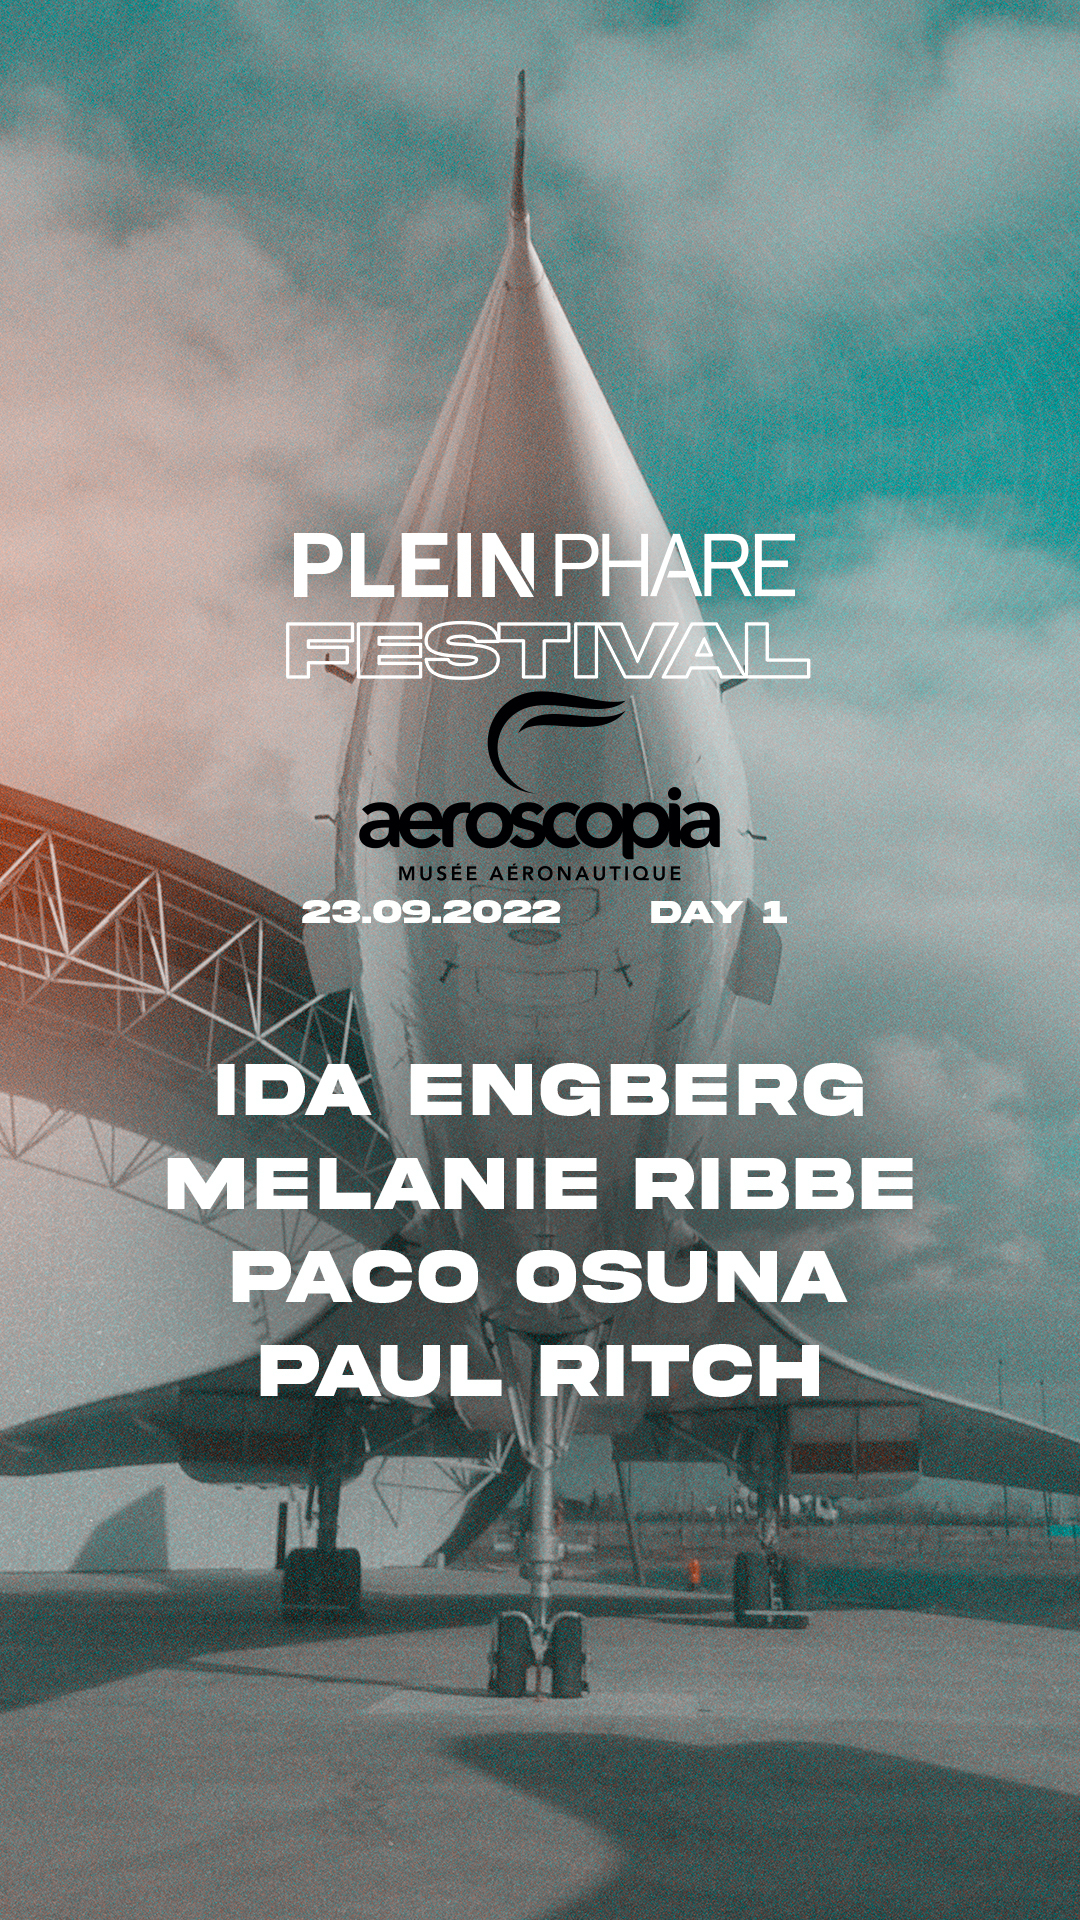 Plein Phare Festival Day 1 - Aeroscopia - Flyer front